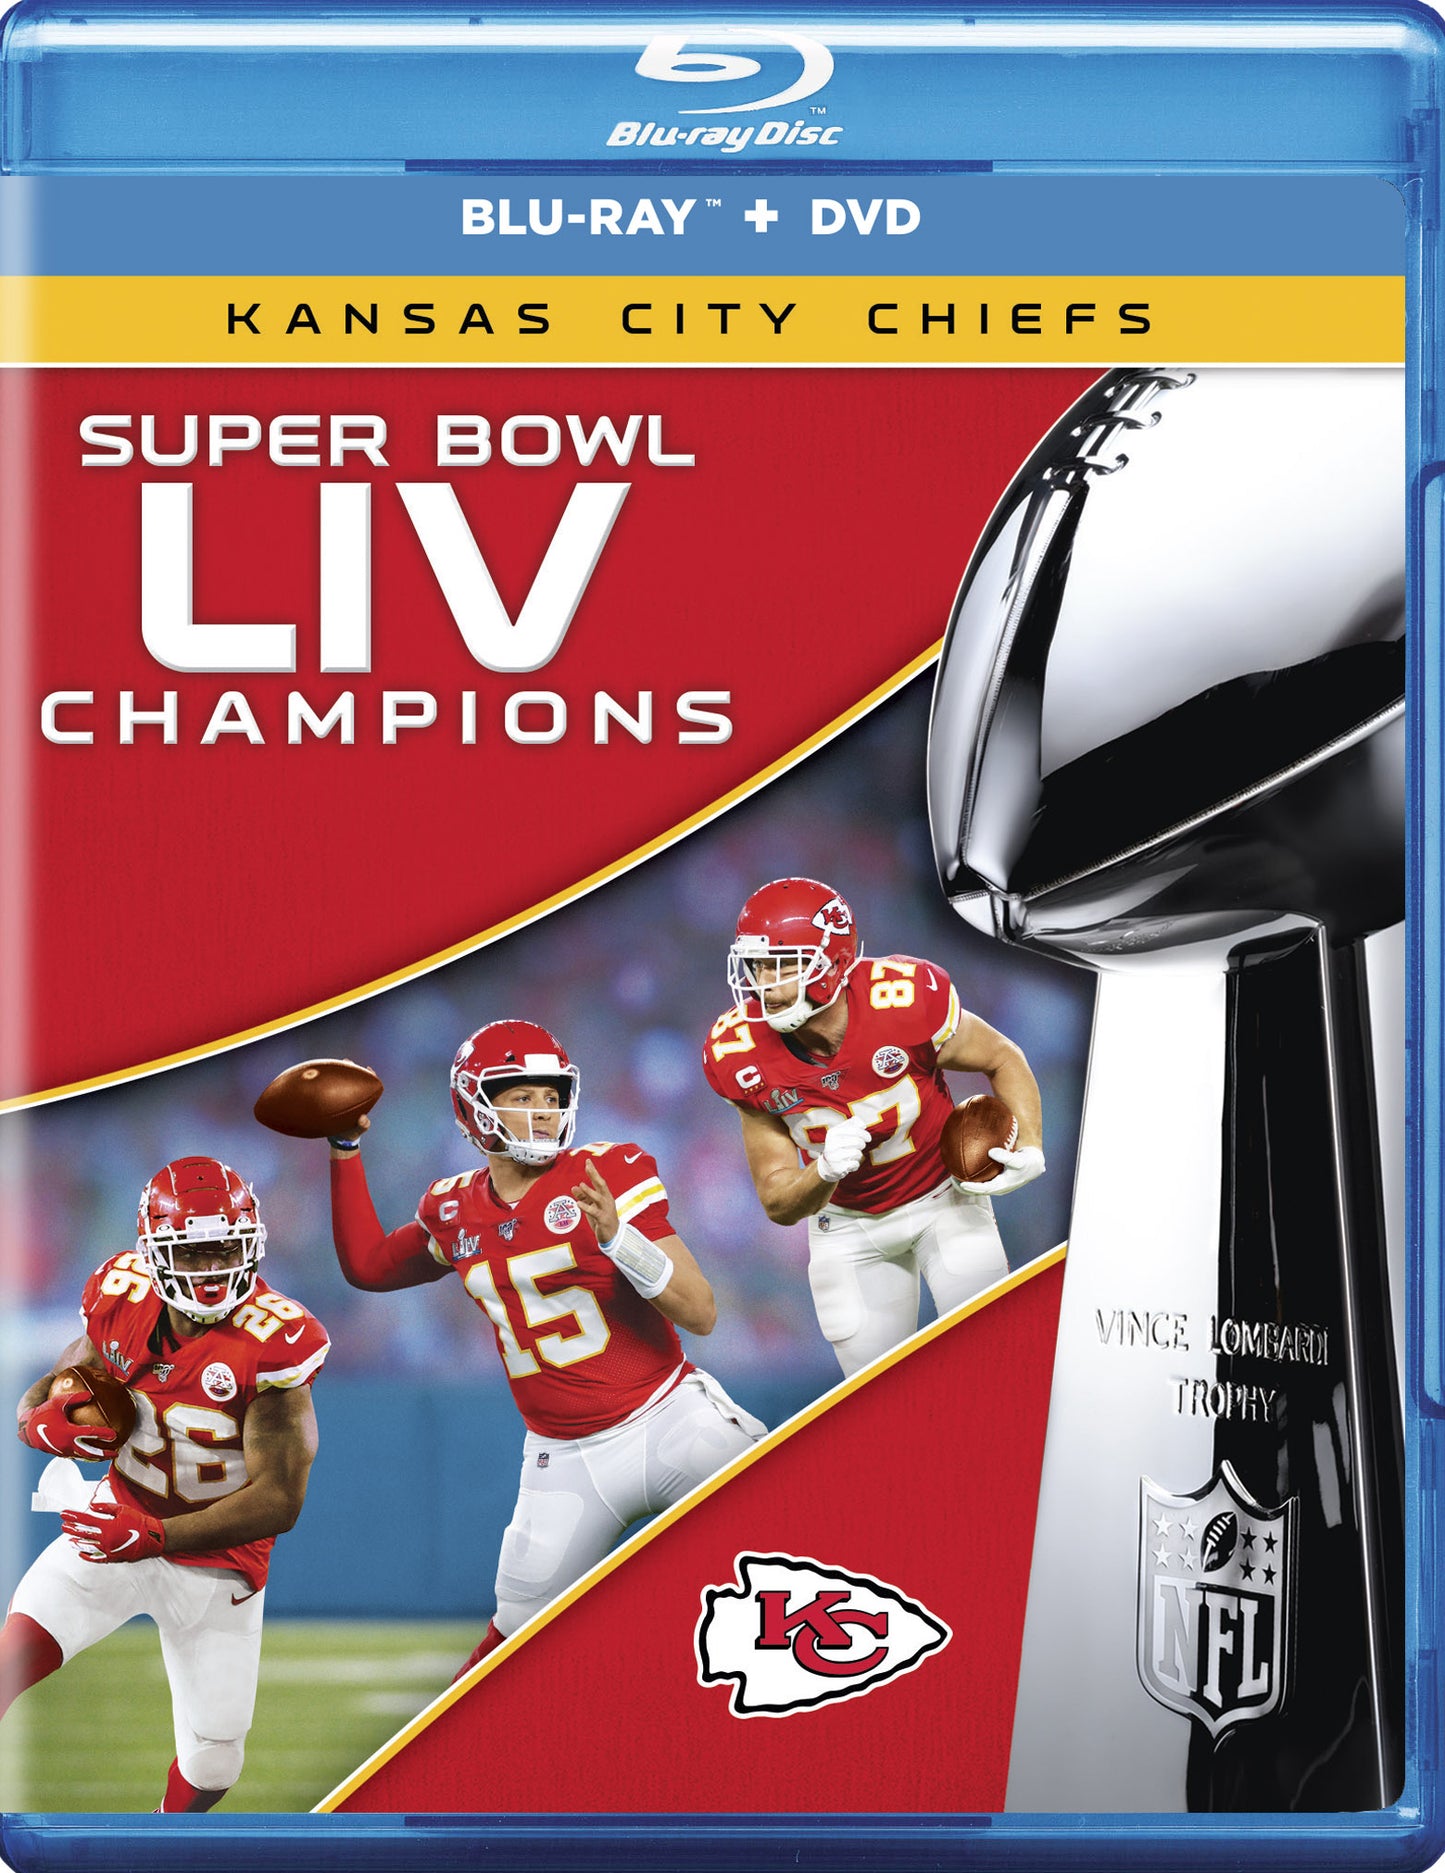 NFL: Super Bowl LIV Champions - Kansas City Chiefs [Blu-ray/DVD] cover art